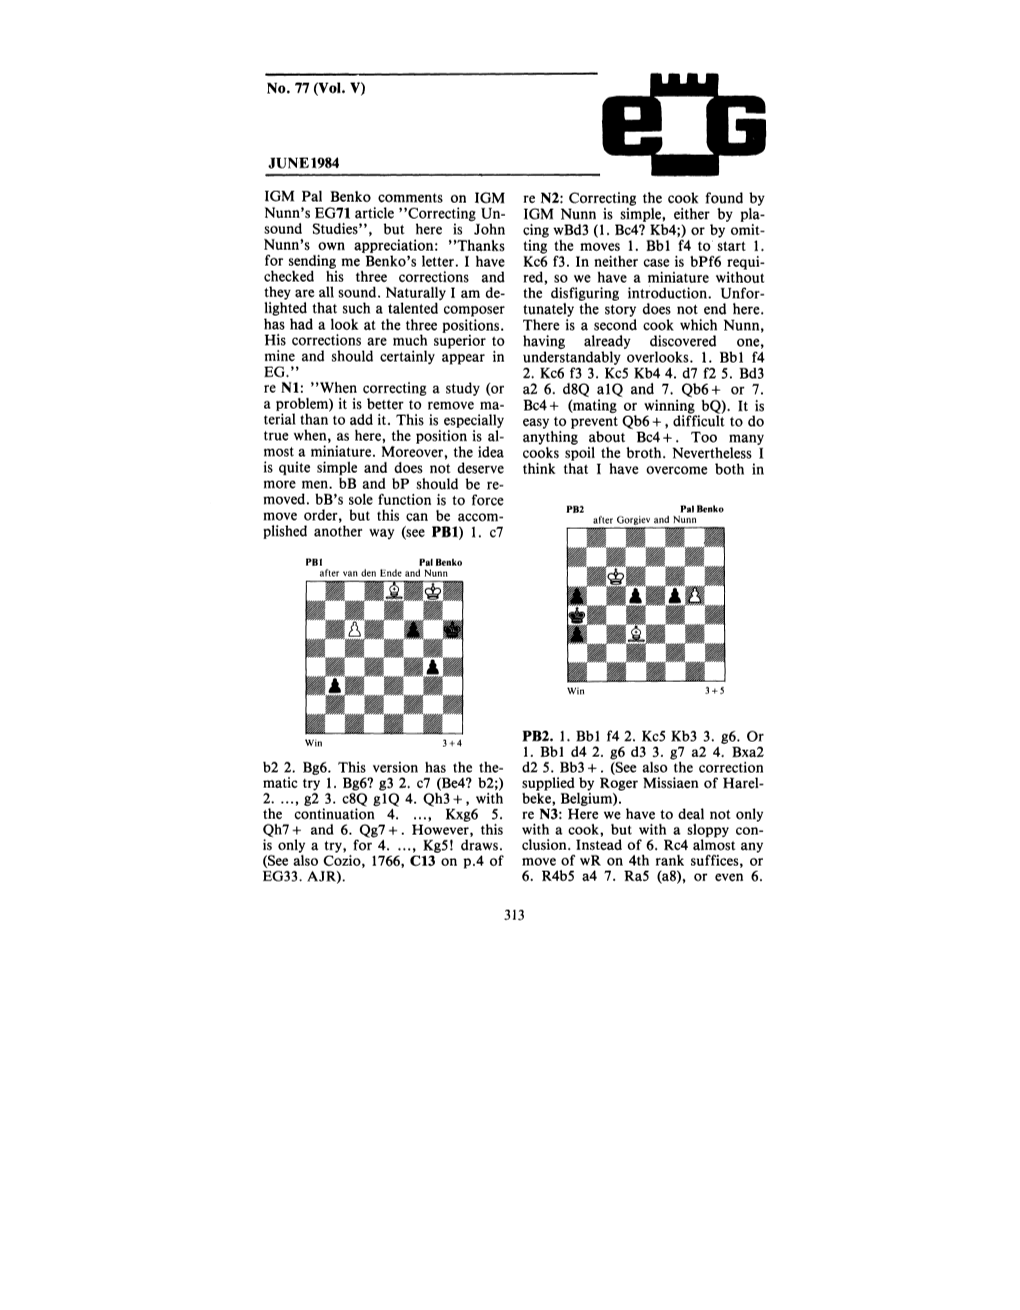 No. 77 (Vol. V) JUNE 1984 IGM Pal Benko Comments on IGM Nunn's